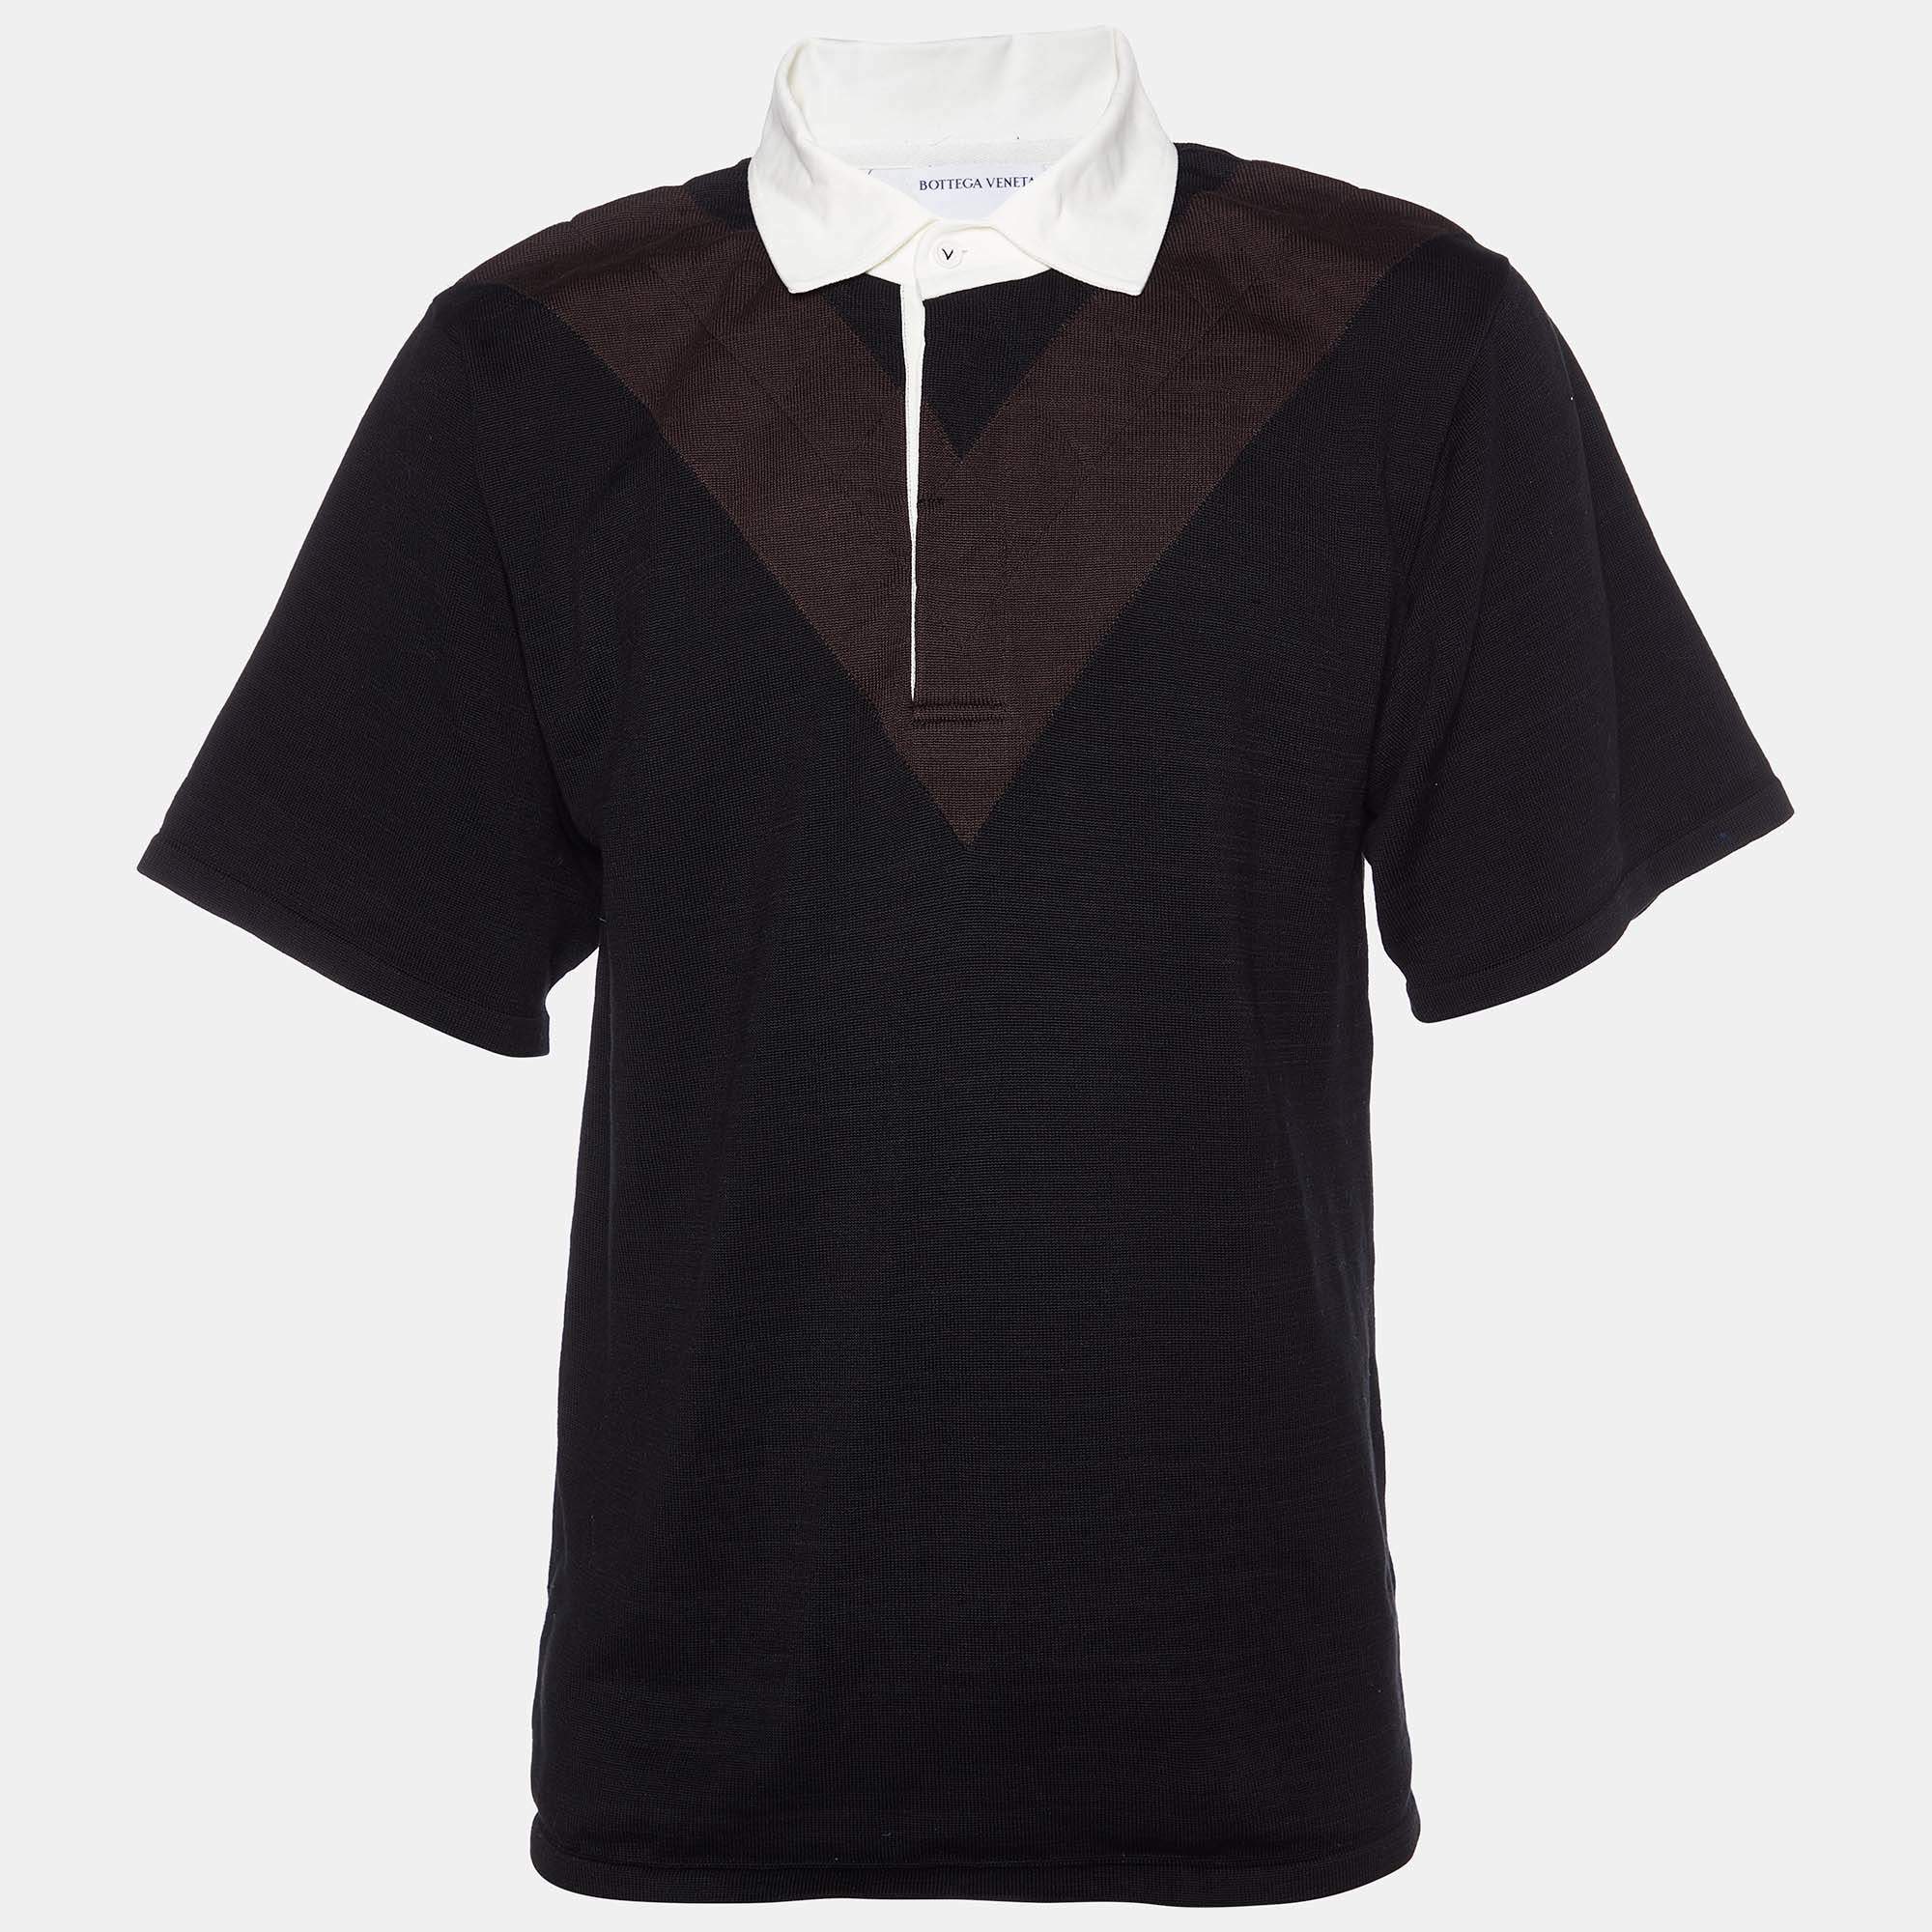 Bottega Veneta Black & Brown Cotton Knit Contrast Collar Polo T-Shirt L